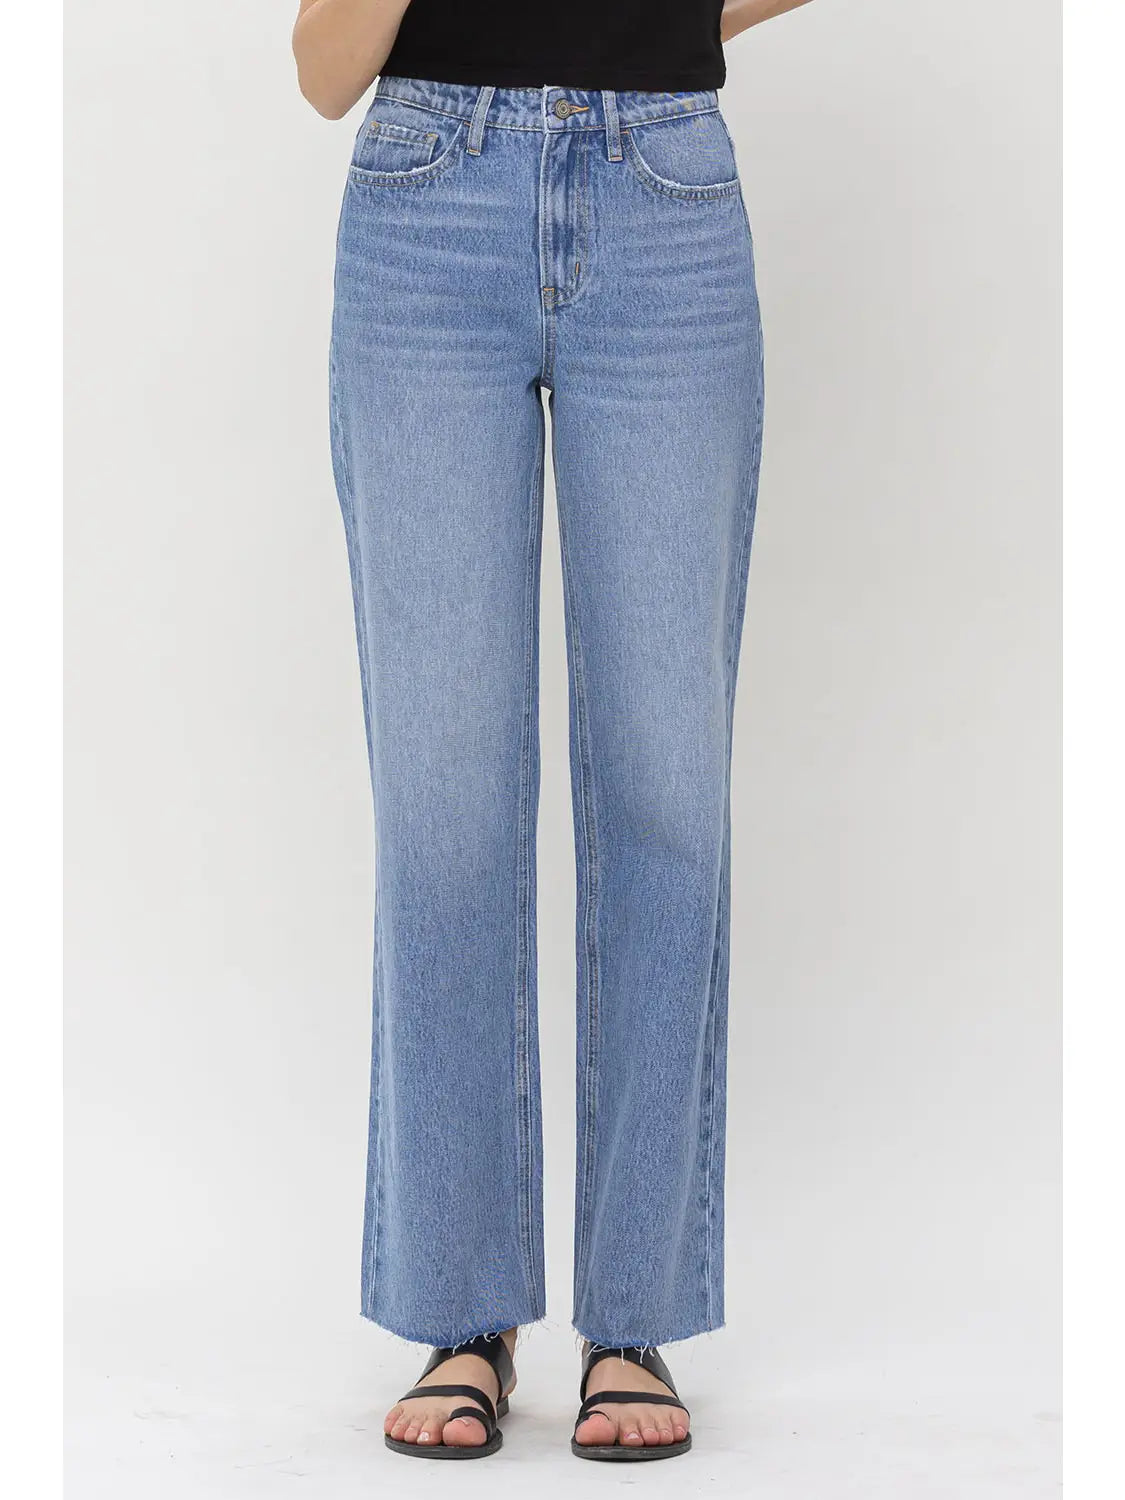 90's Vintage Super High Rise Loose Jeans